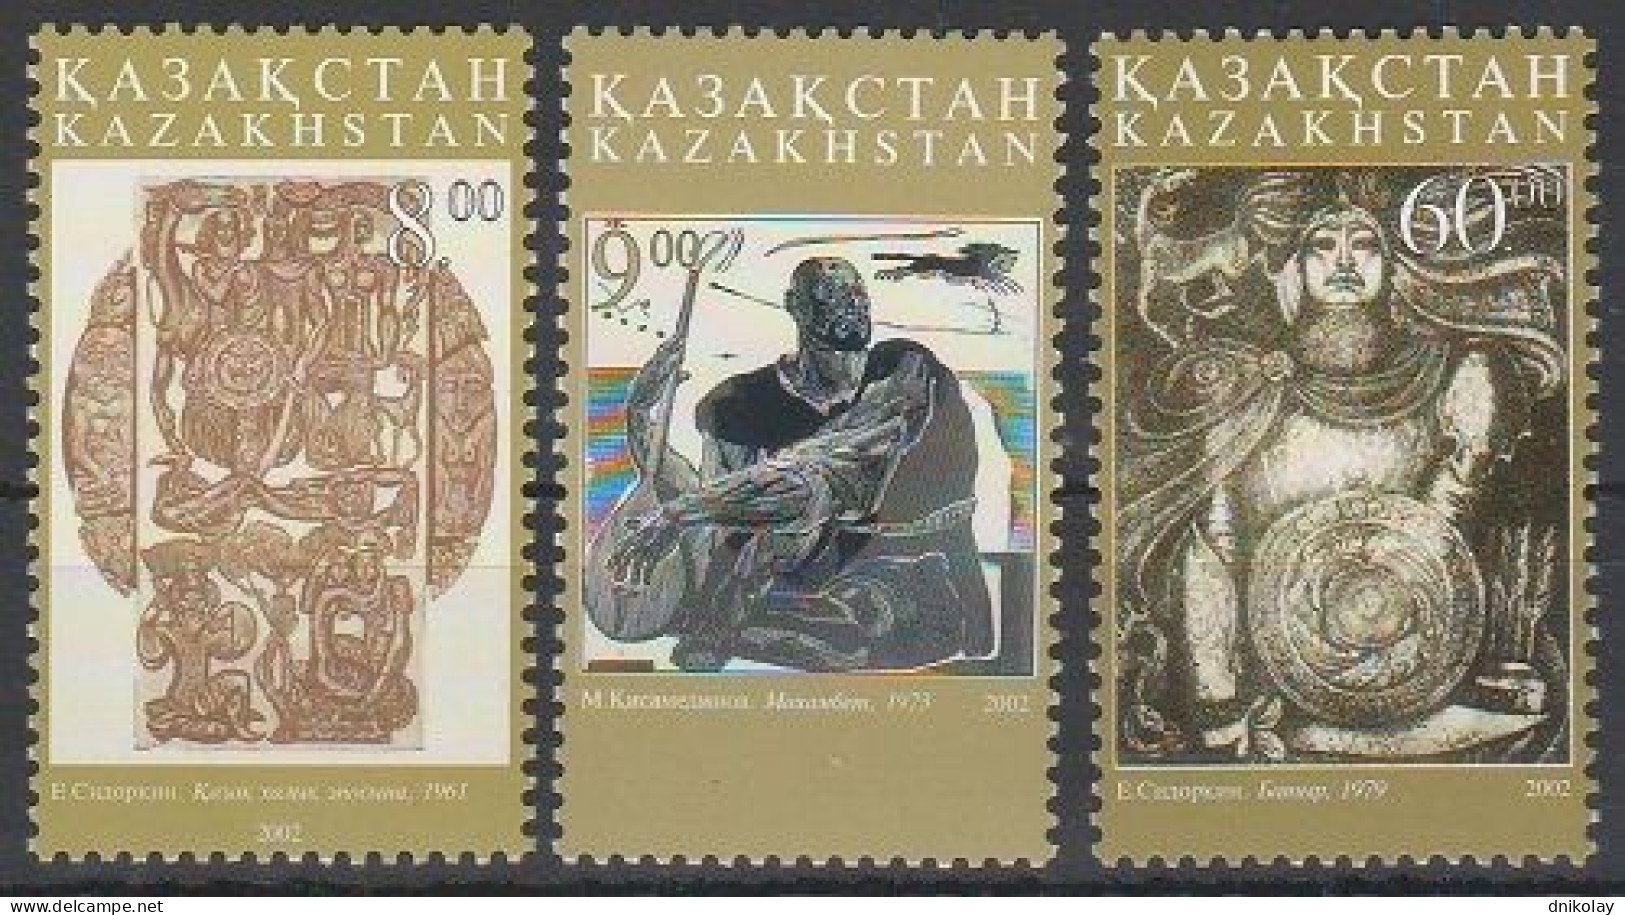 2002 393 Kazakhstan Art MNH - Kazajstán